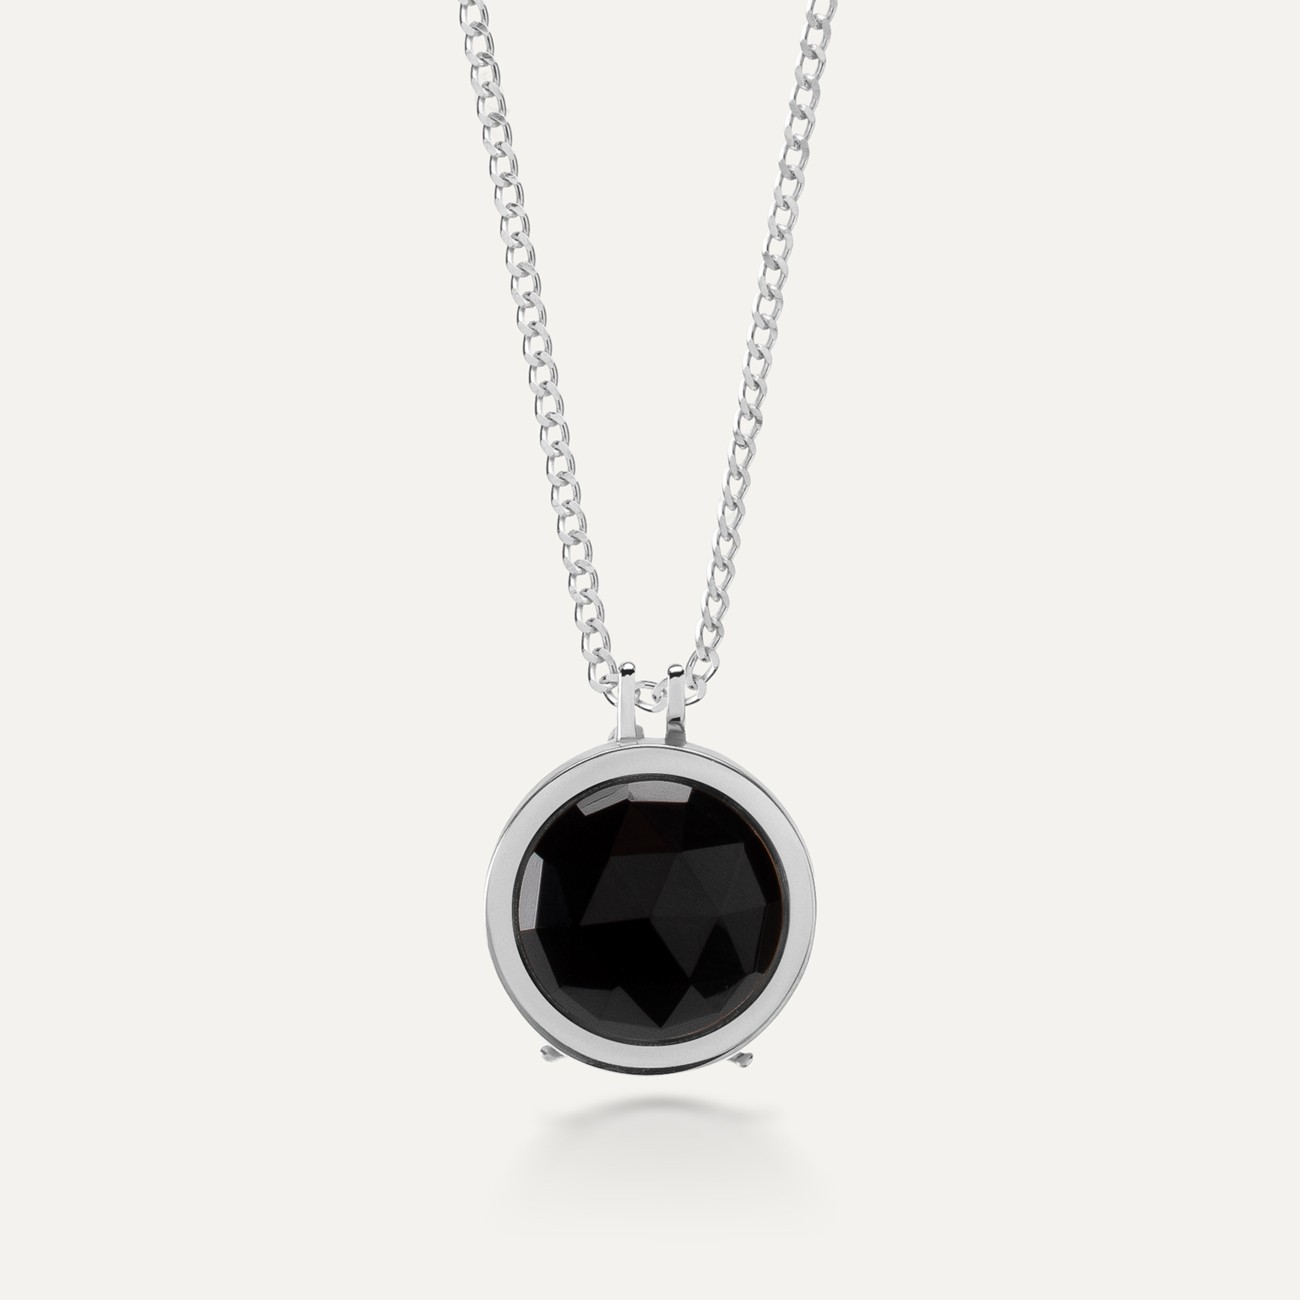 Locket pendant necklace, engraved & foto, black onyx stone, sterling silver 925